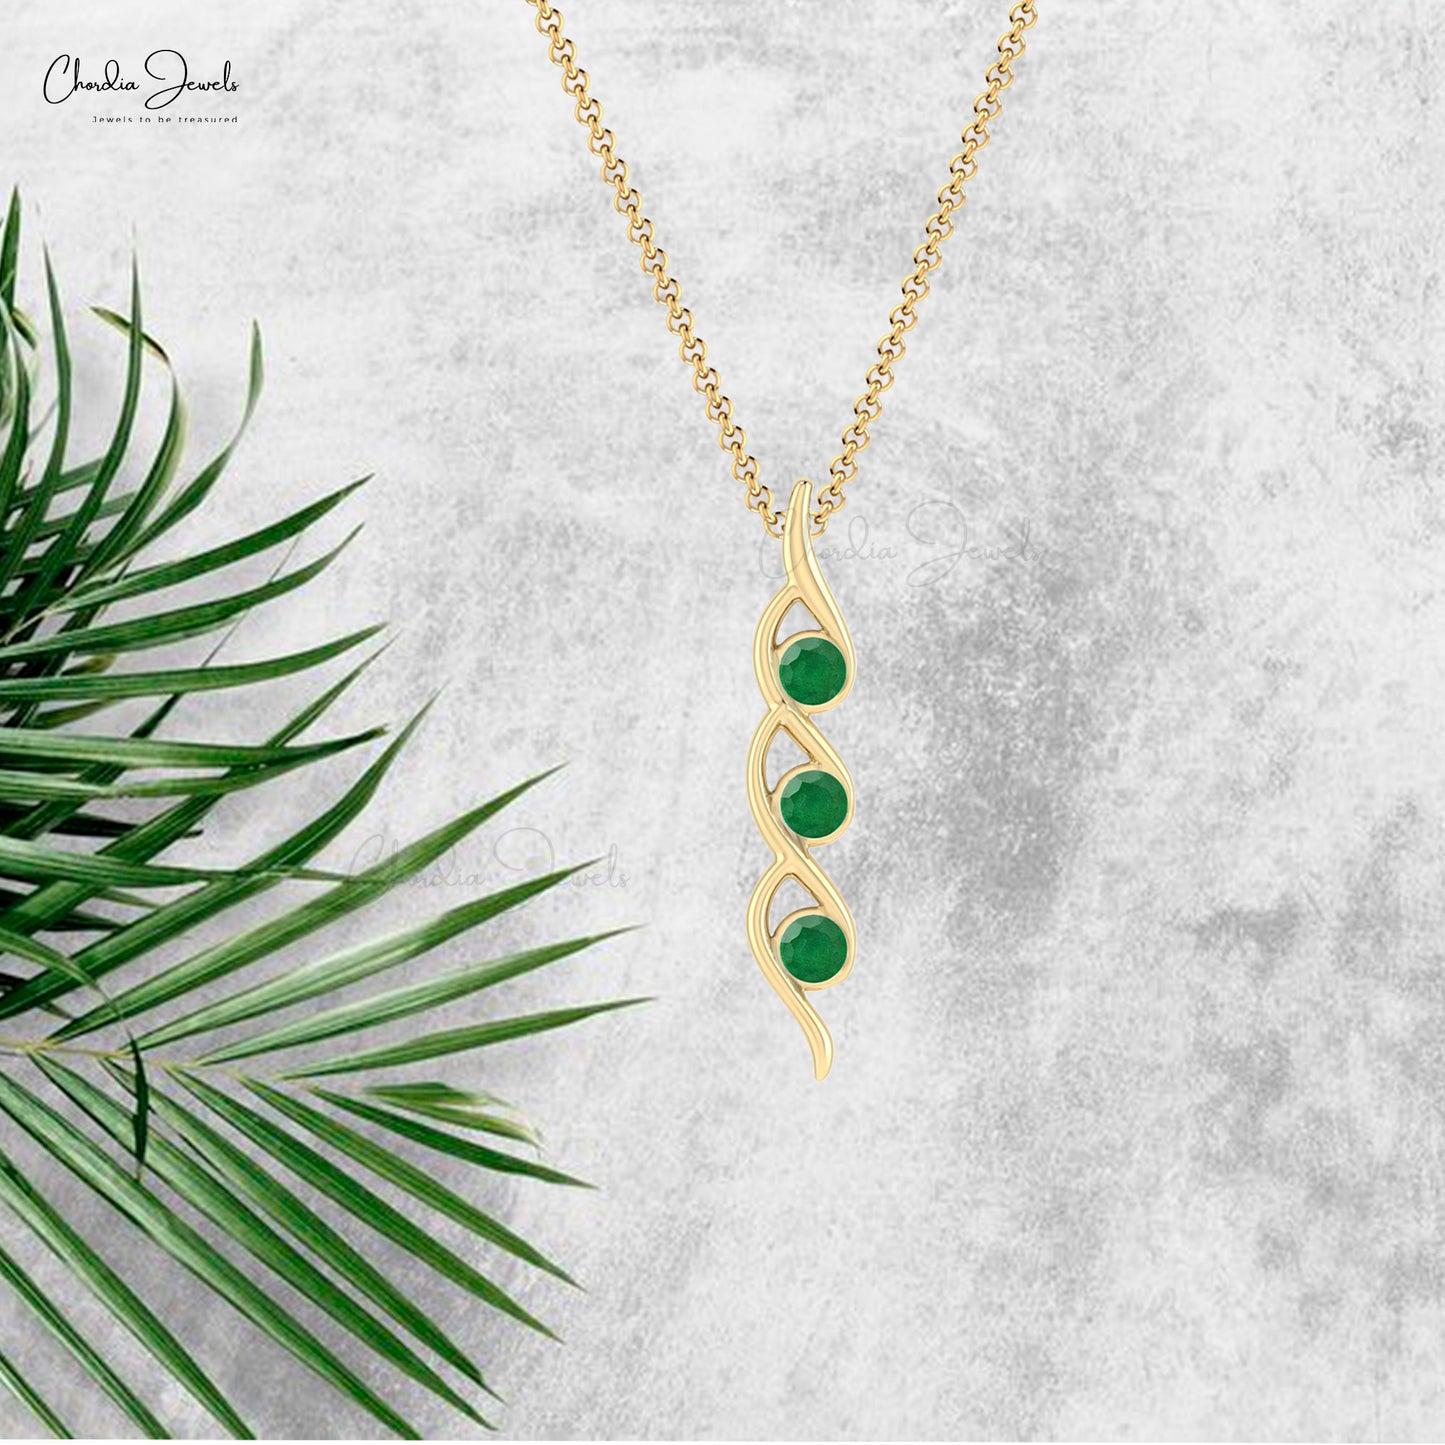 Stunning Three Stone Twisted Pendant Genuine Emerald Gemstone 14k Real Gold Delicate Pendant